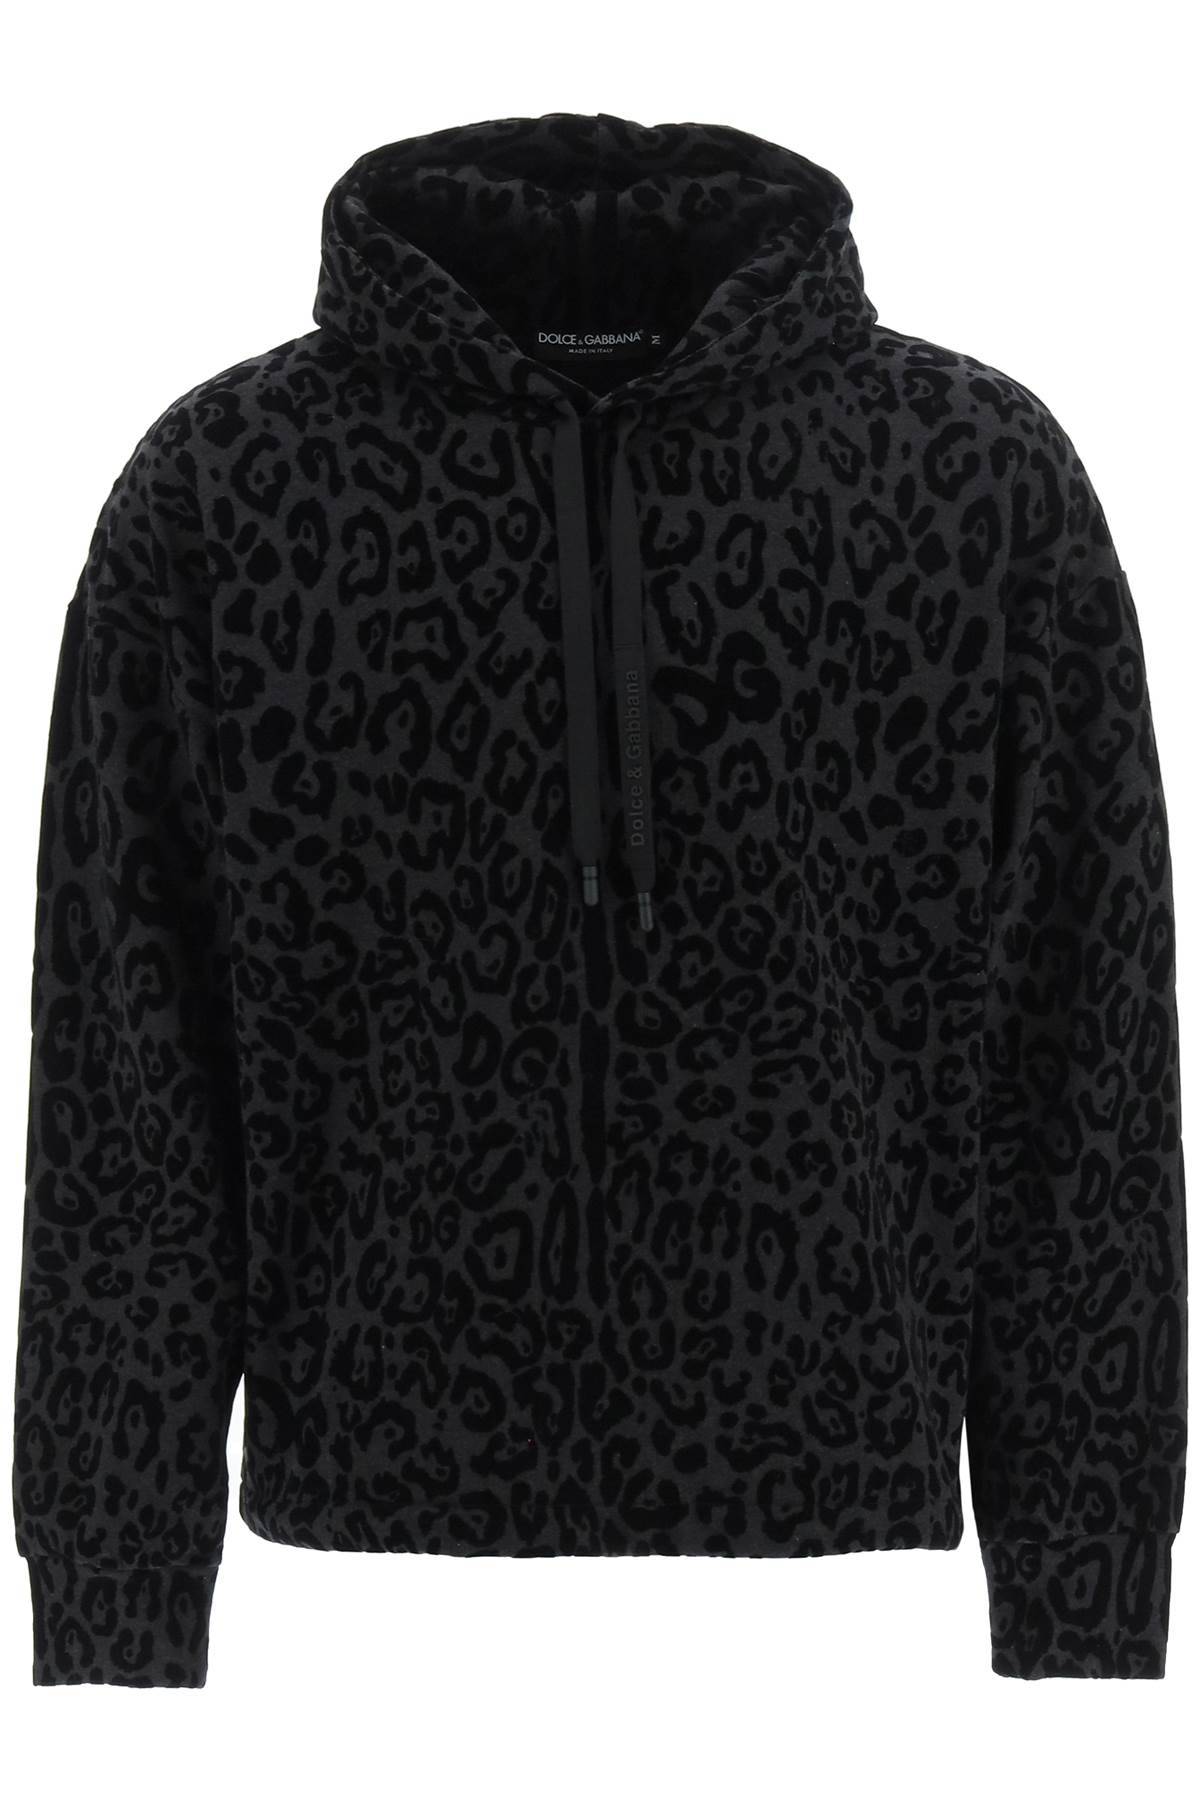 Dolce & Gabbana DOLCE & GABBANA flocked leopard hoodie